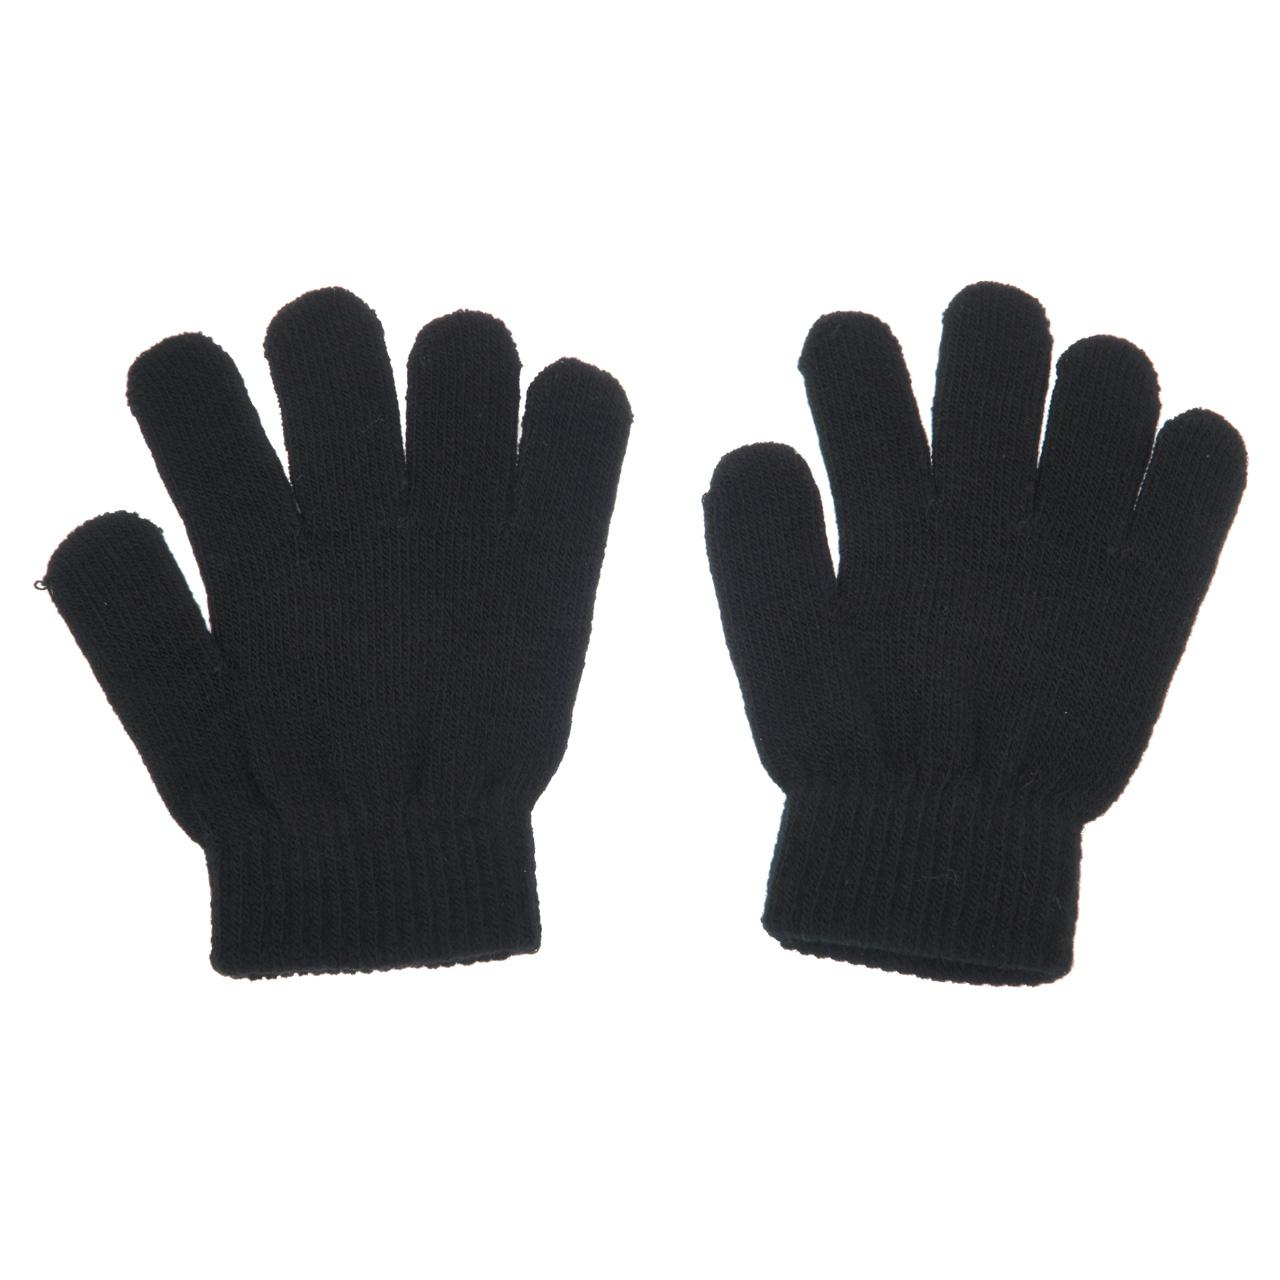 Gloves marlybag magicos black glove jr 64330-new